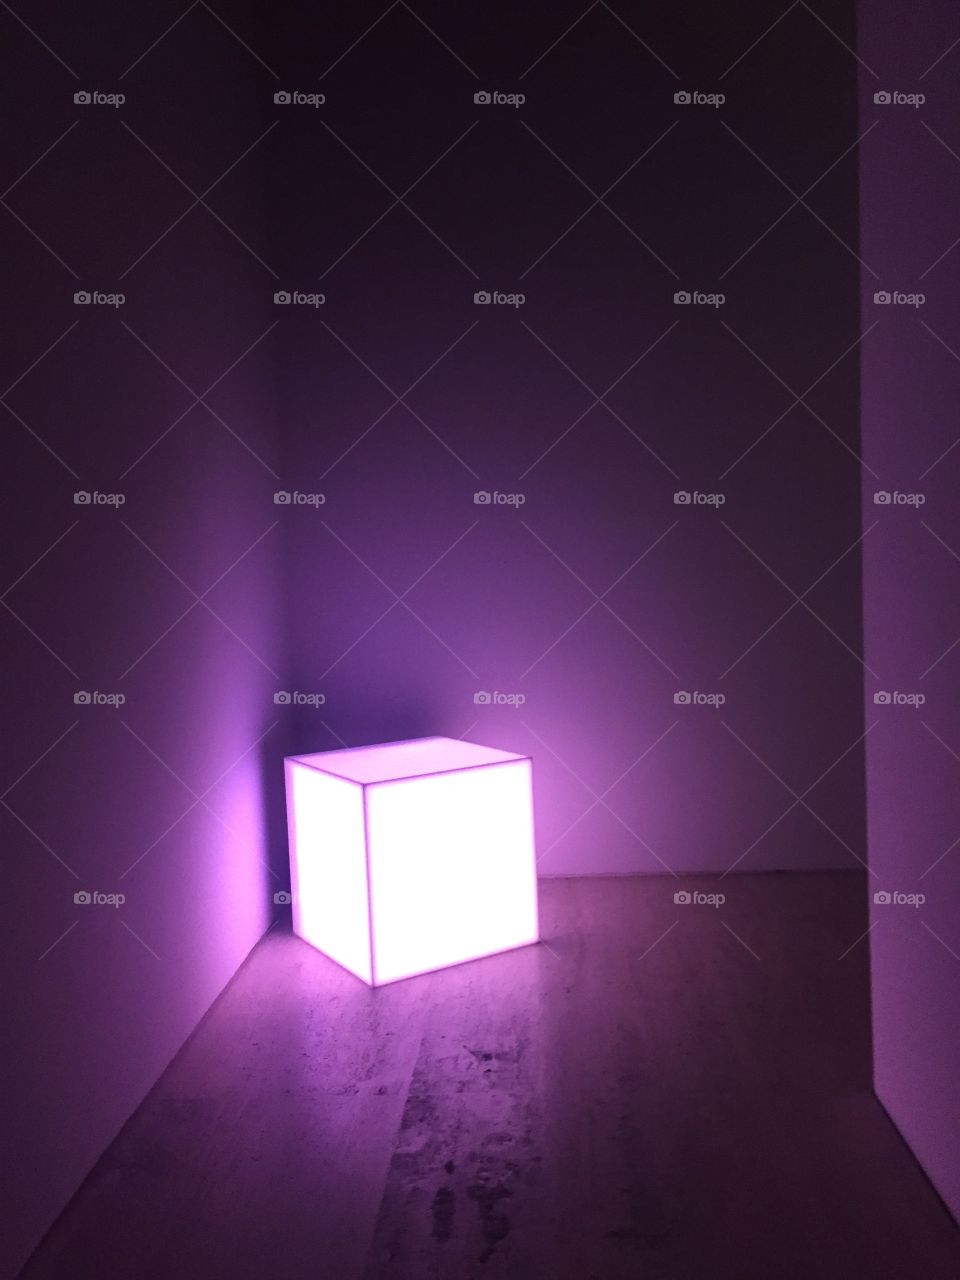 Light box